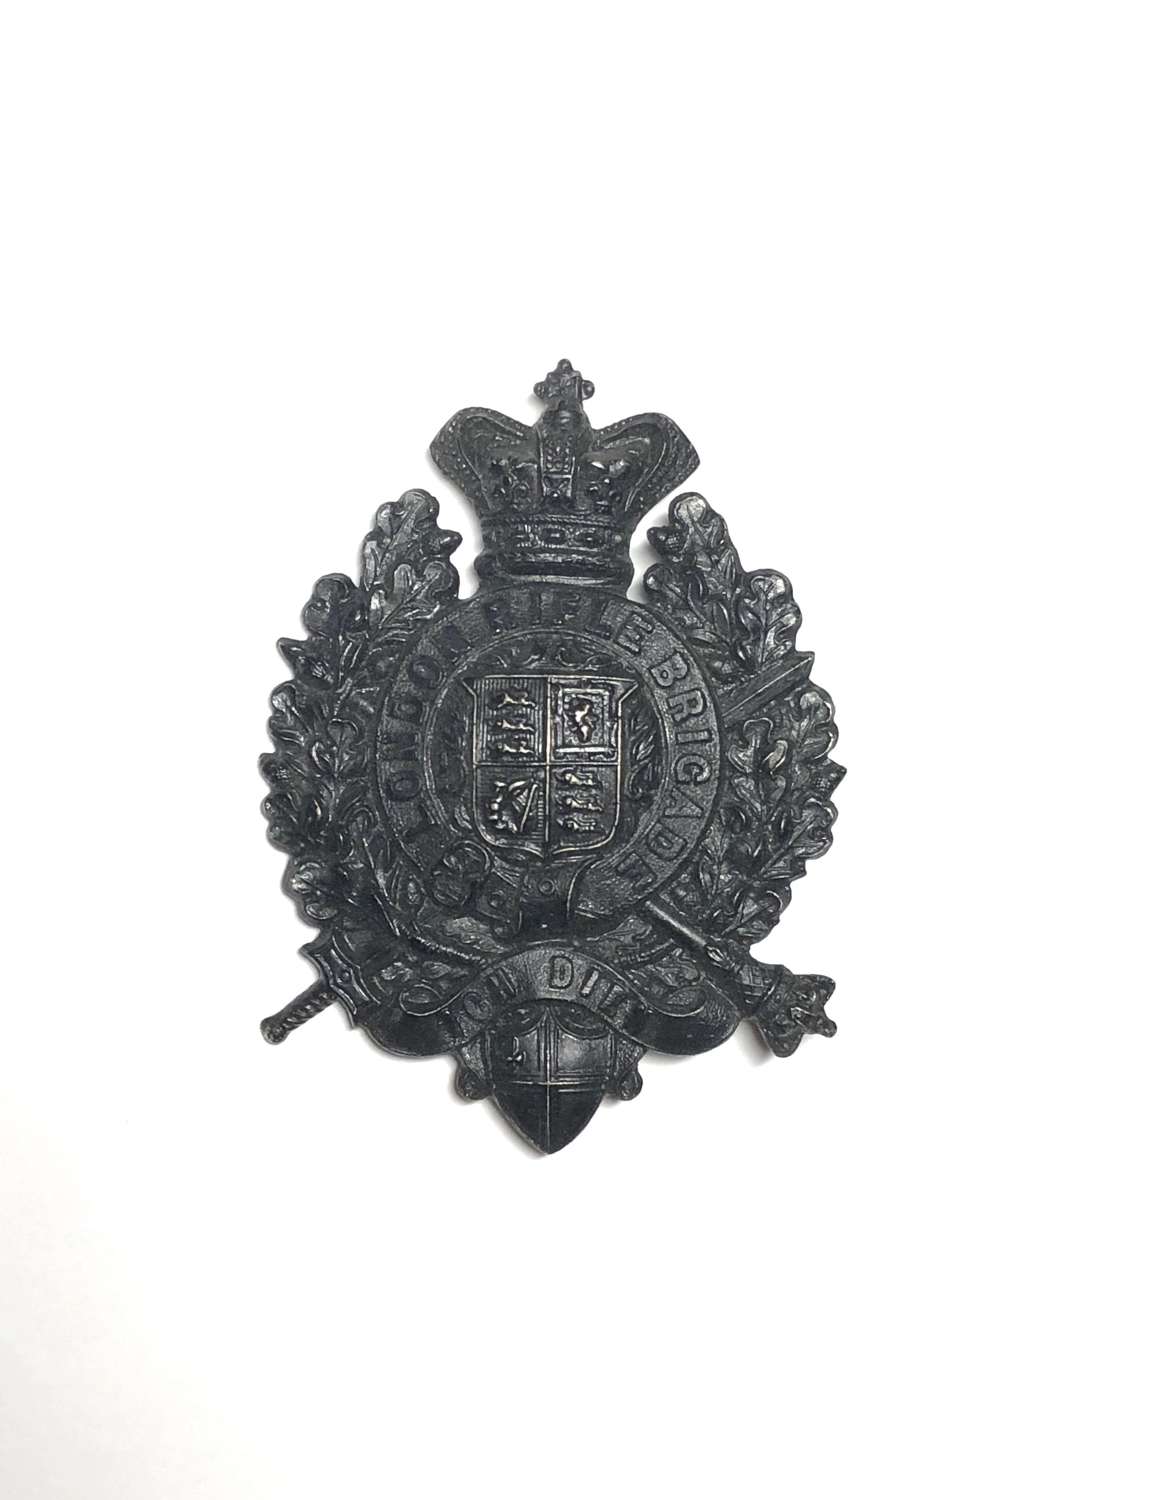 London Rifle Brigade Victorian glengarry badge circa 1874-96.